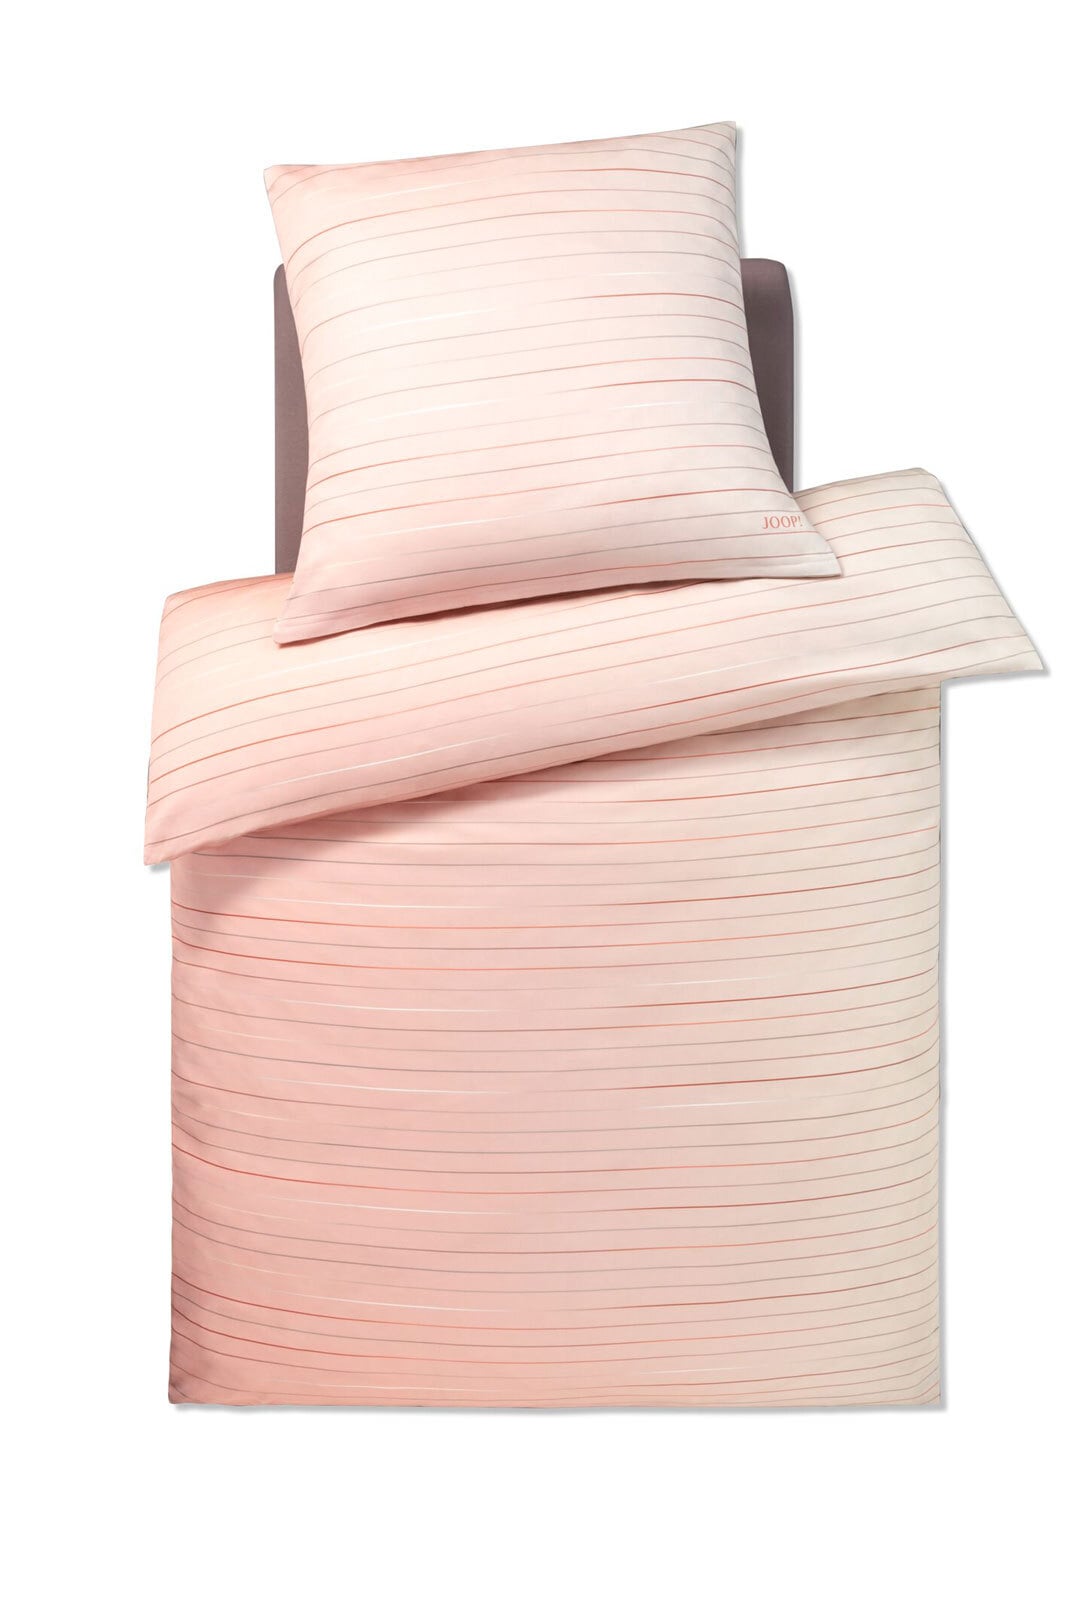 JOOP! Mako-Satin-Bettwäsche MOVE 155 x 220 cm rosa